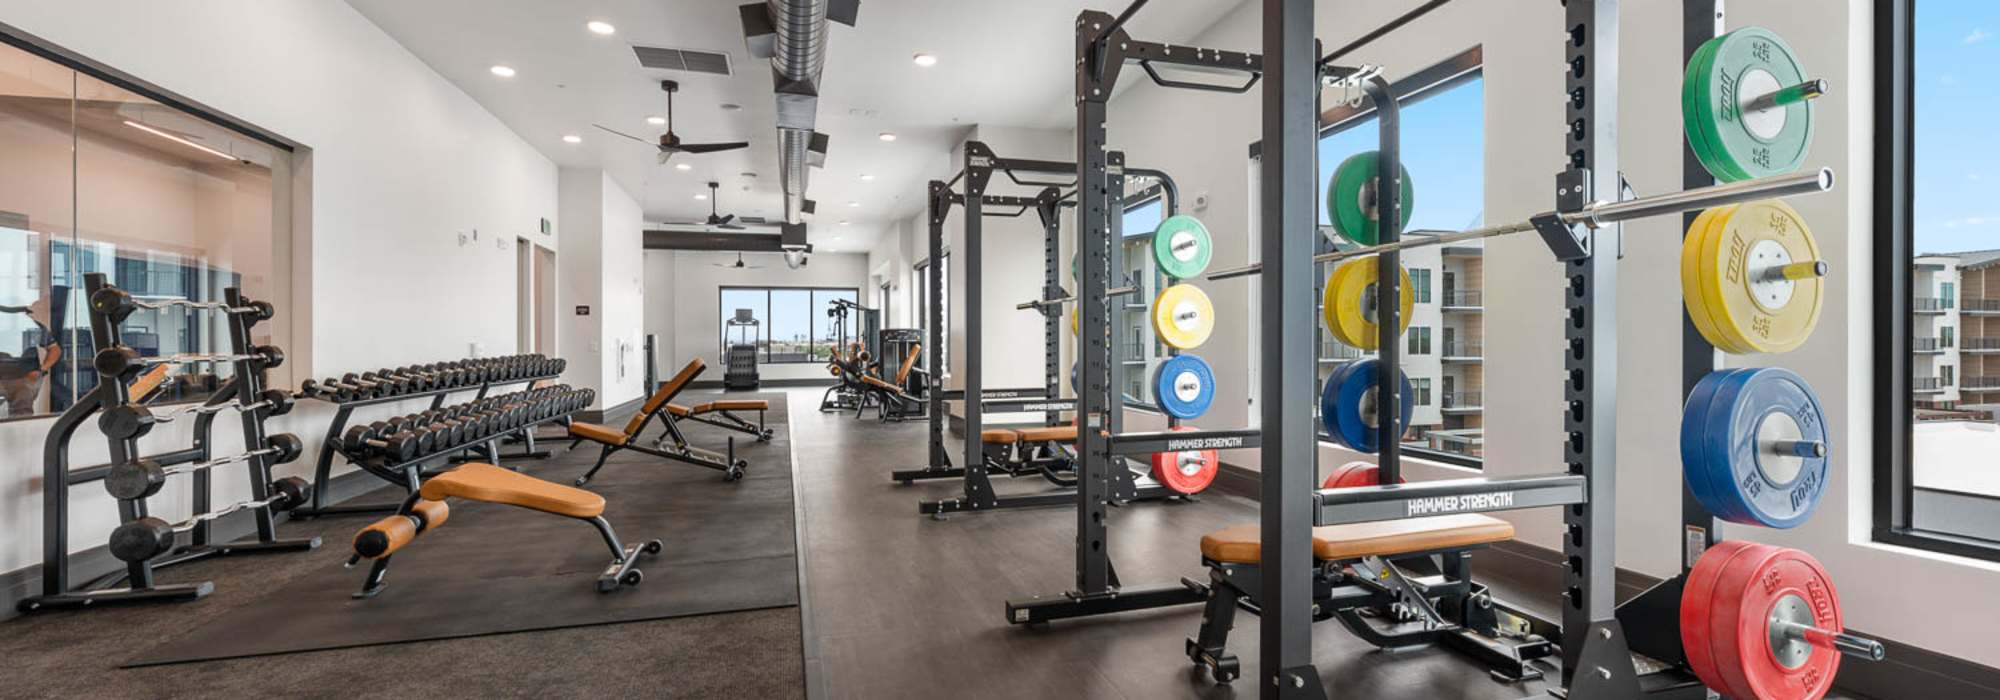 3,000 sq ft fitness center at Quintana at Cooley Station in Gilbert, Arizona